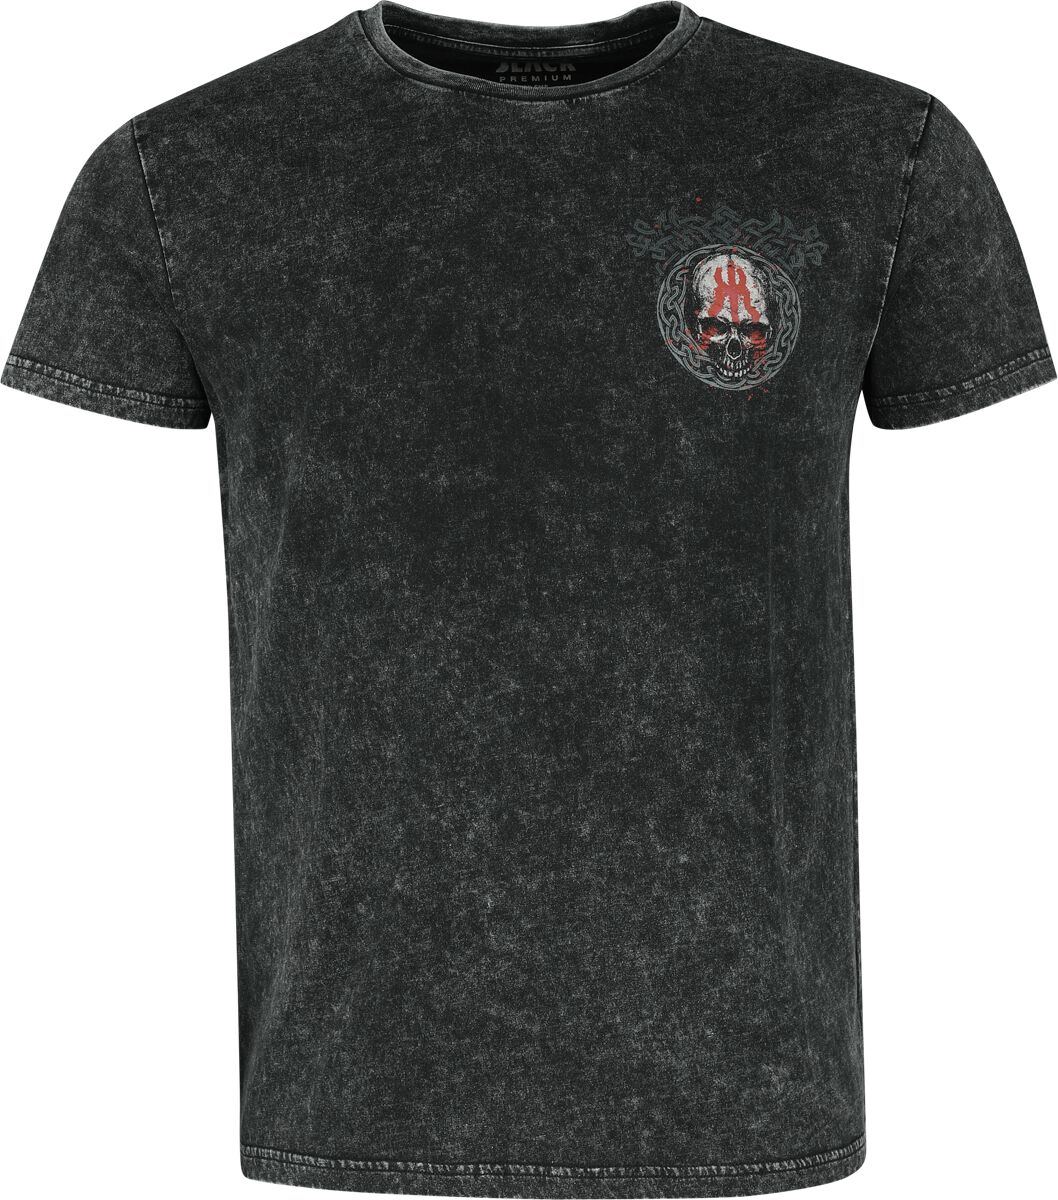 Image of T-Shirt di Black Premium by EMP - T-shirt With Skull Print - S a XXL - Uomo - nero